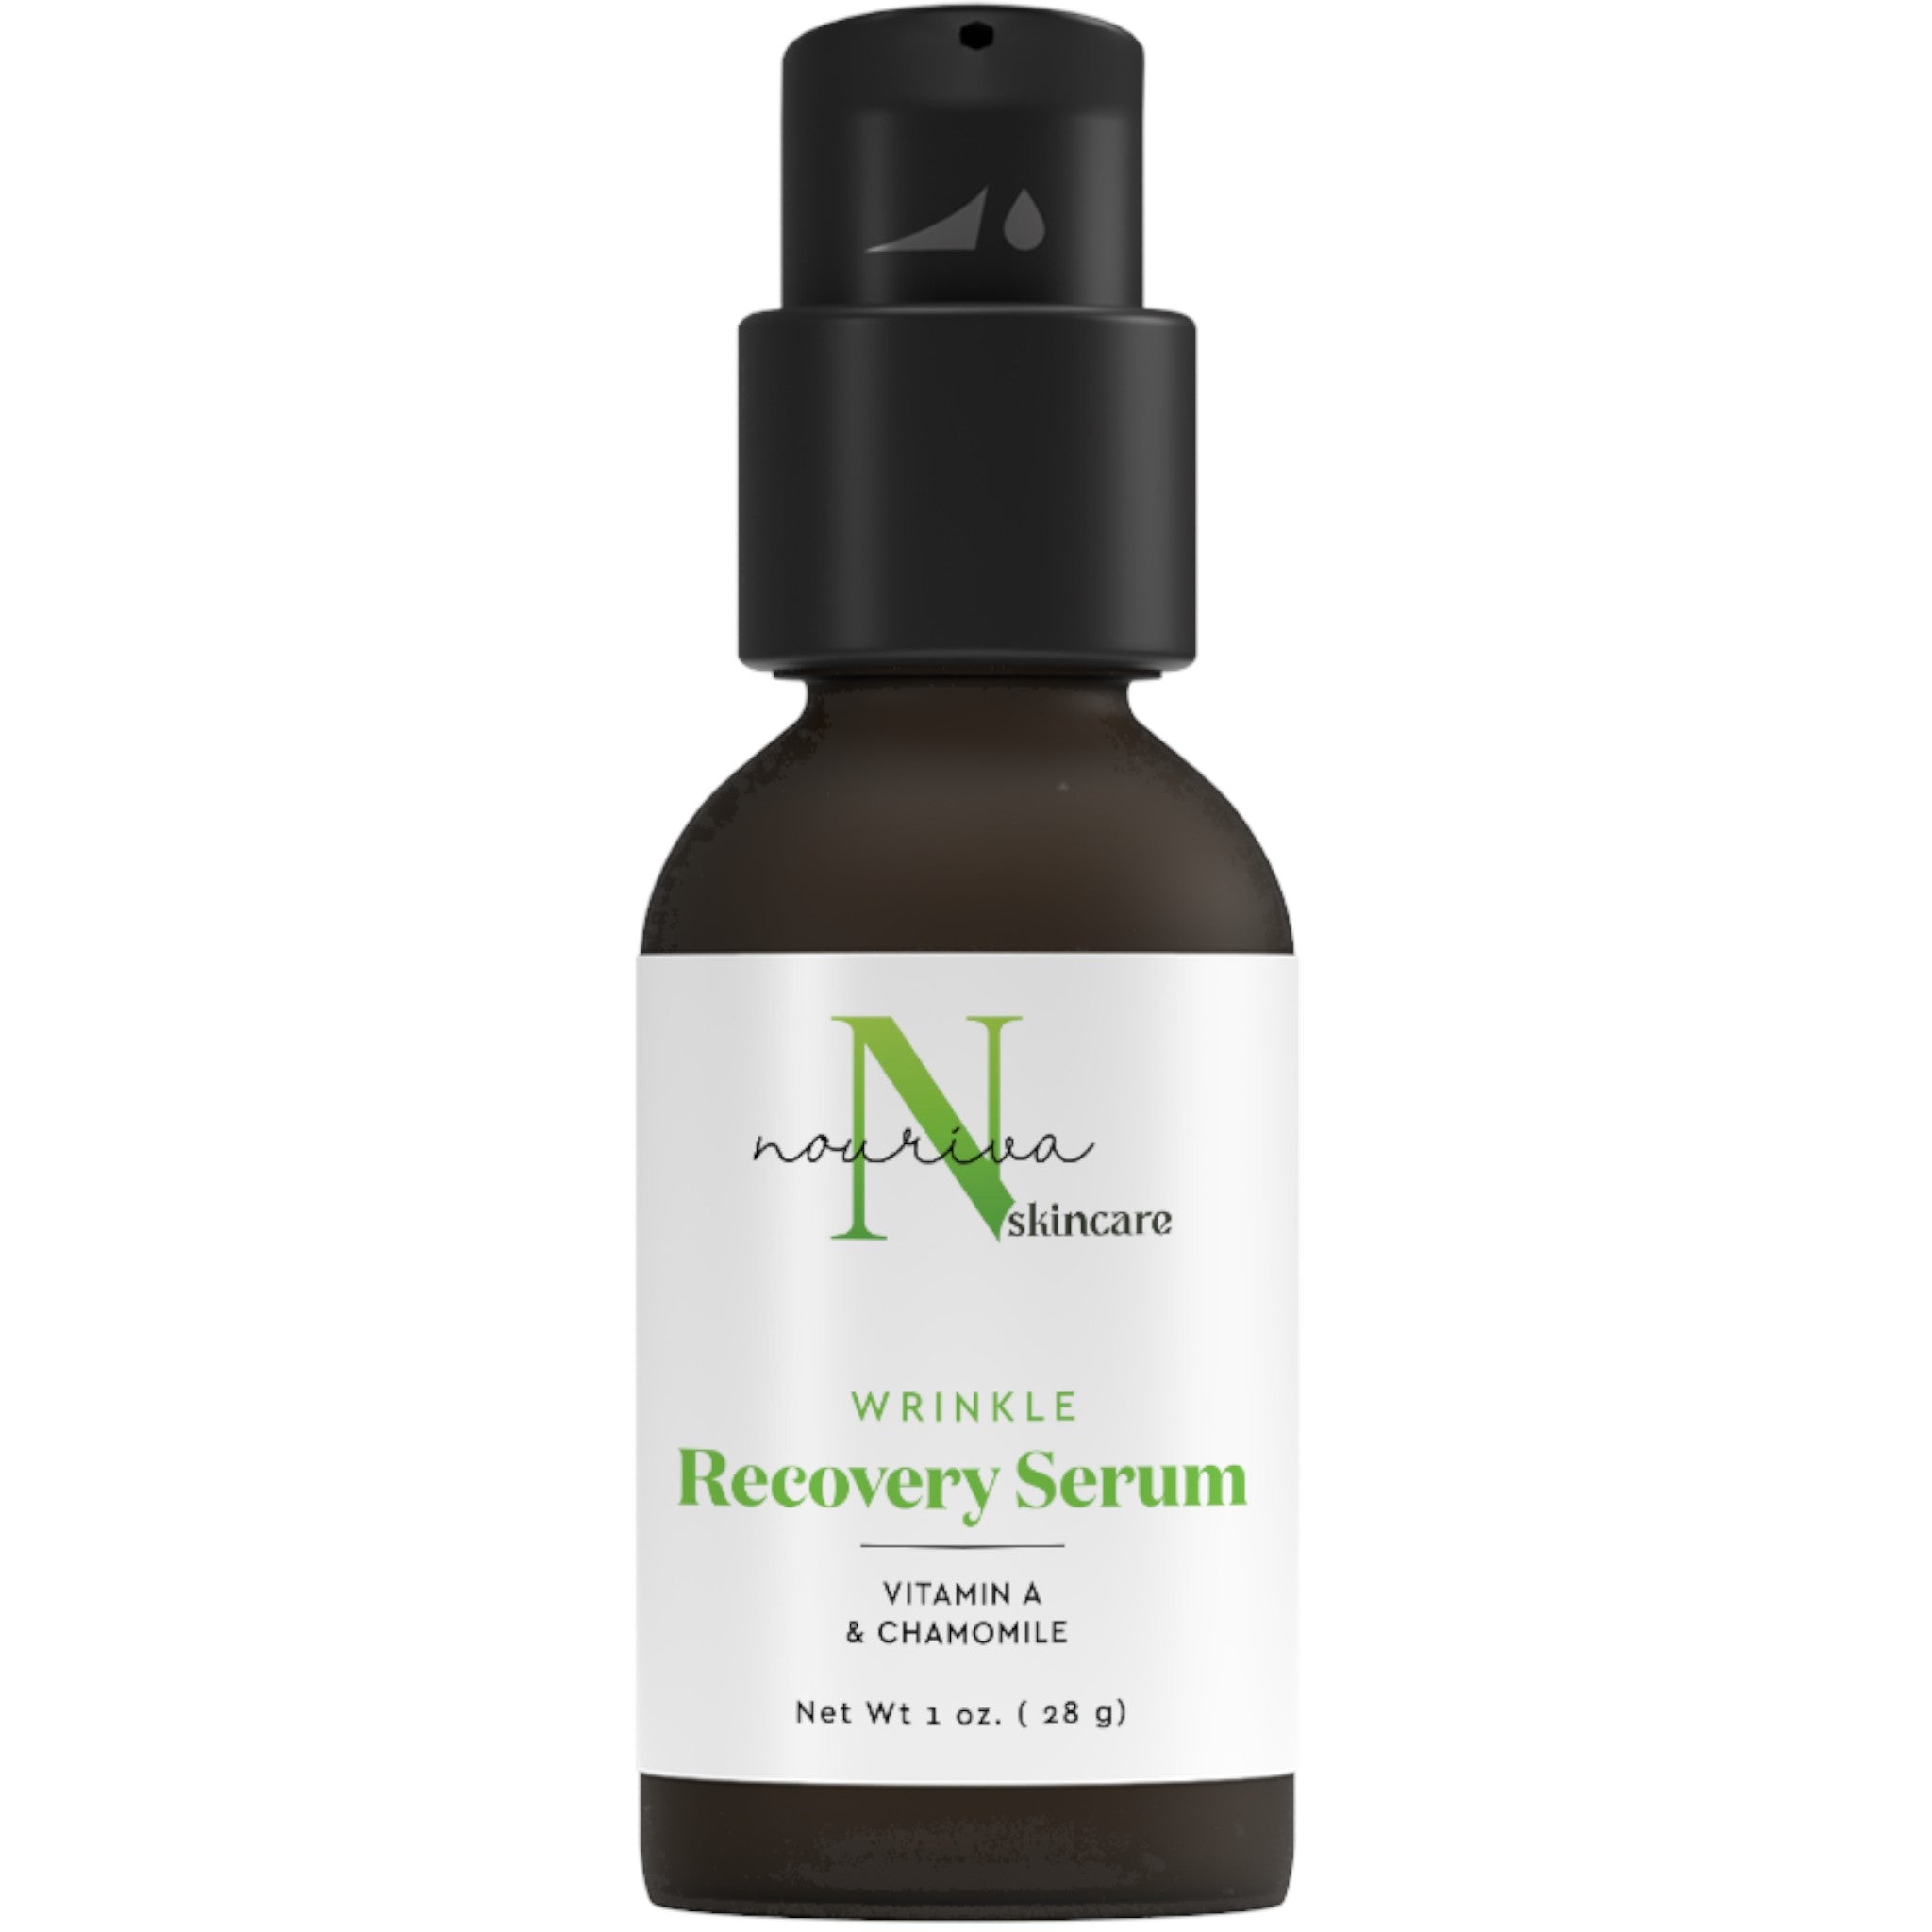 Wrinkle Recovery Serum